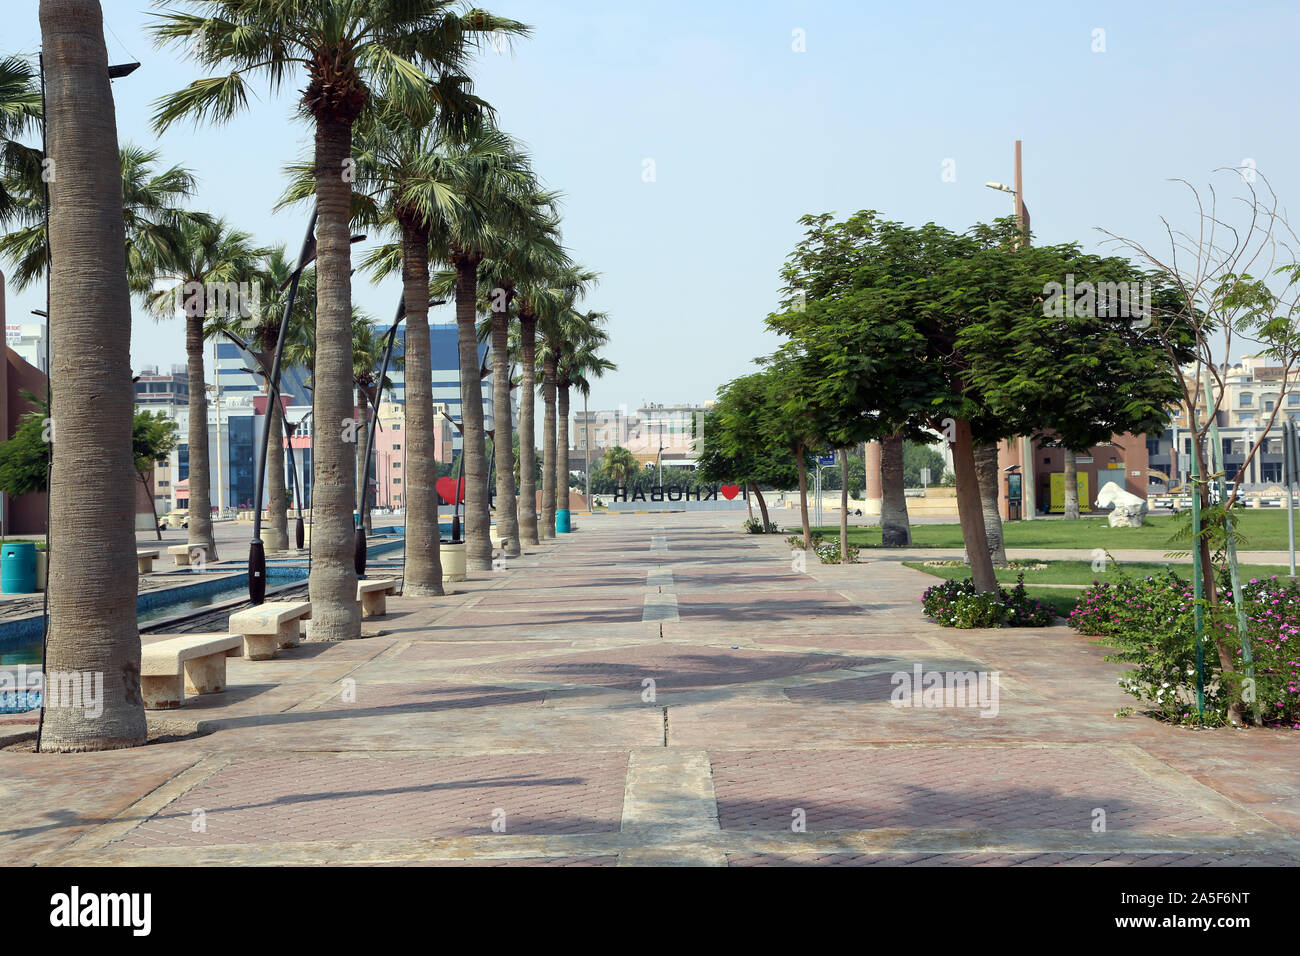 Saudi Arabia, Al Khobar, Corniche Stock Photo